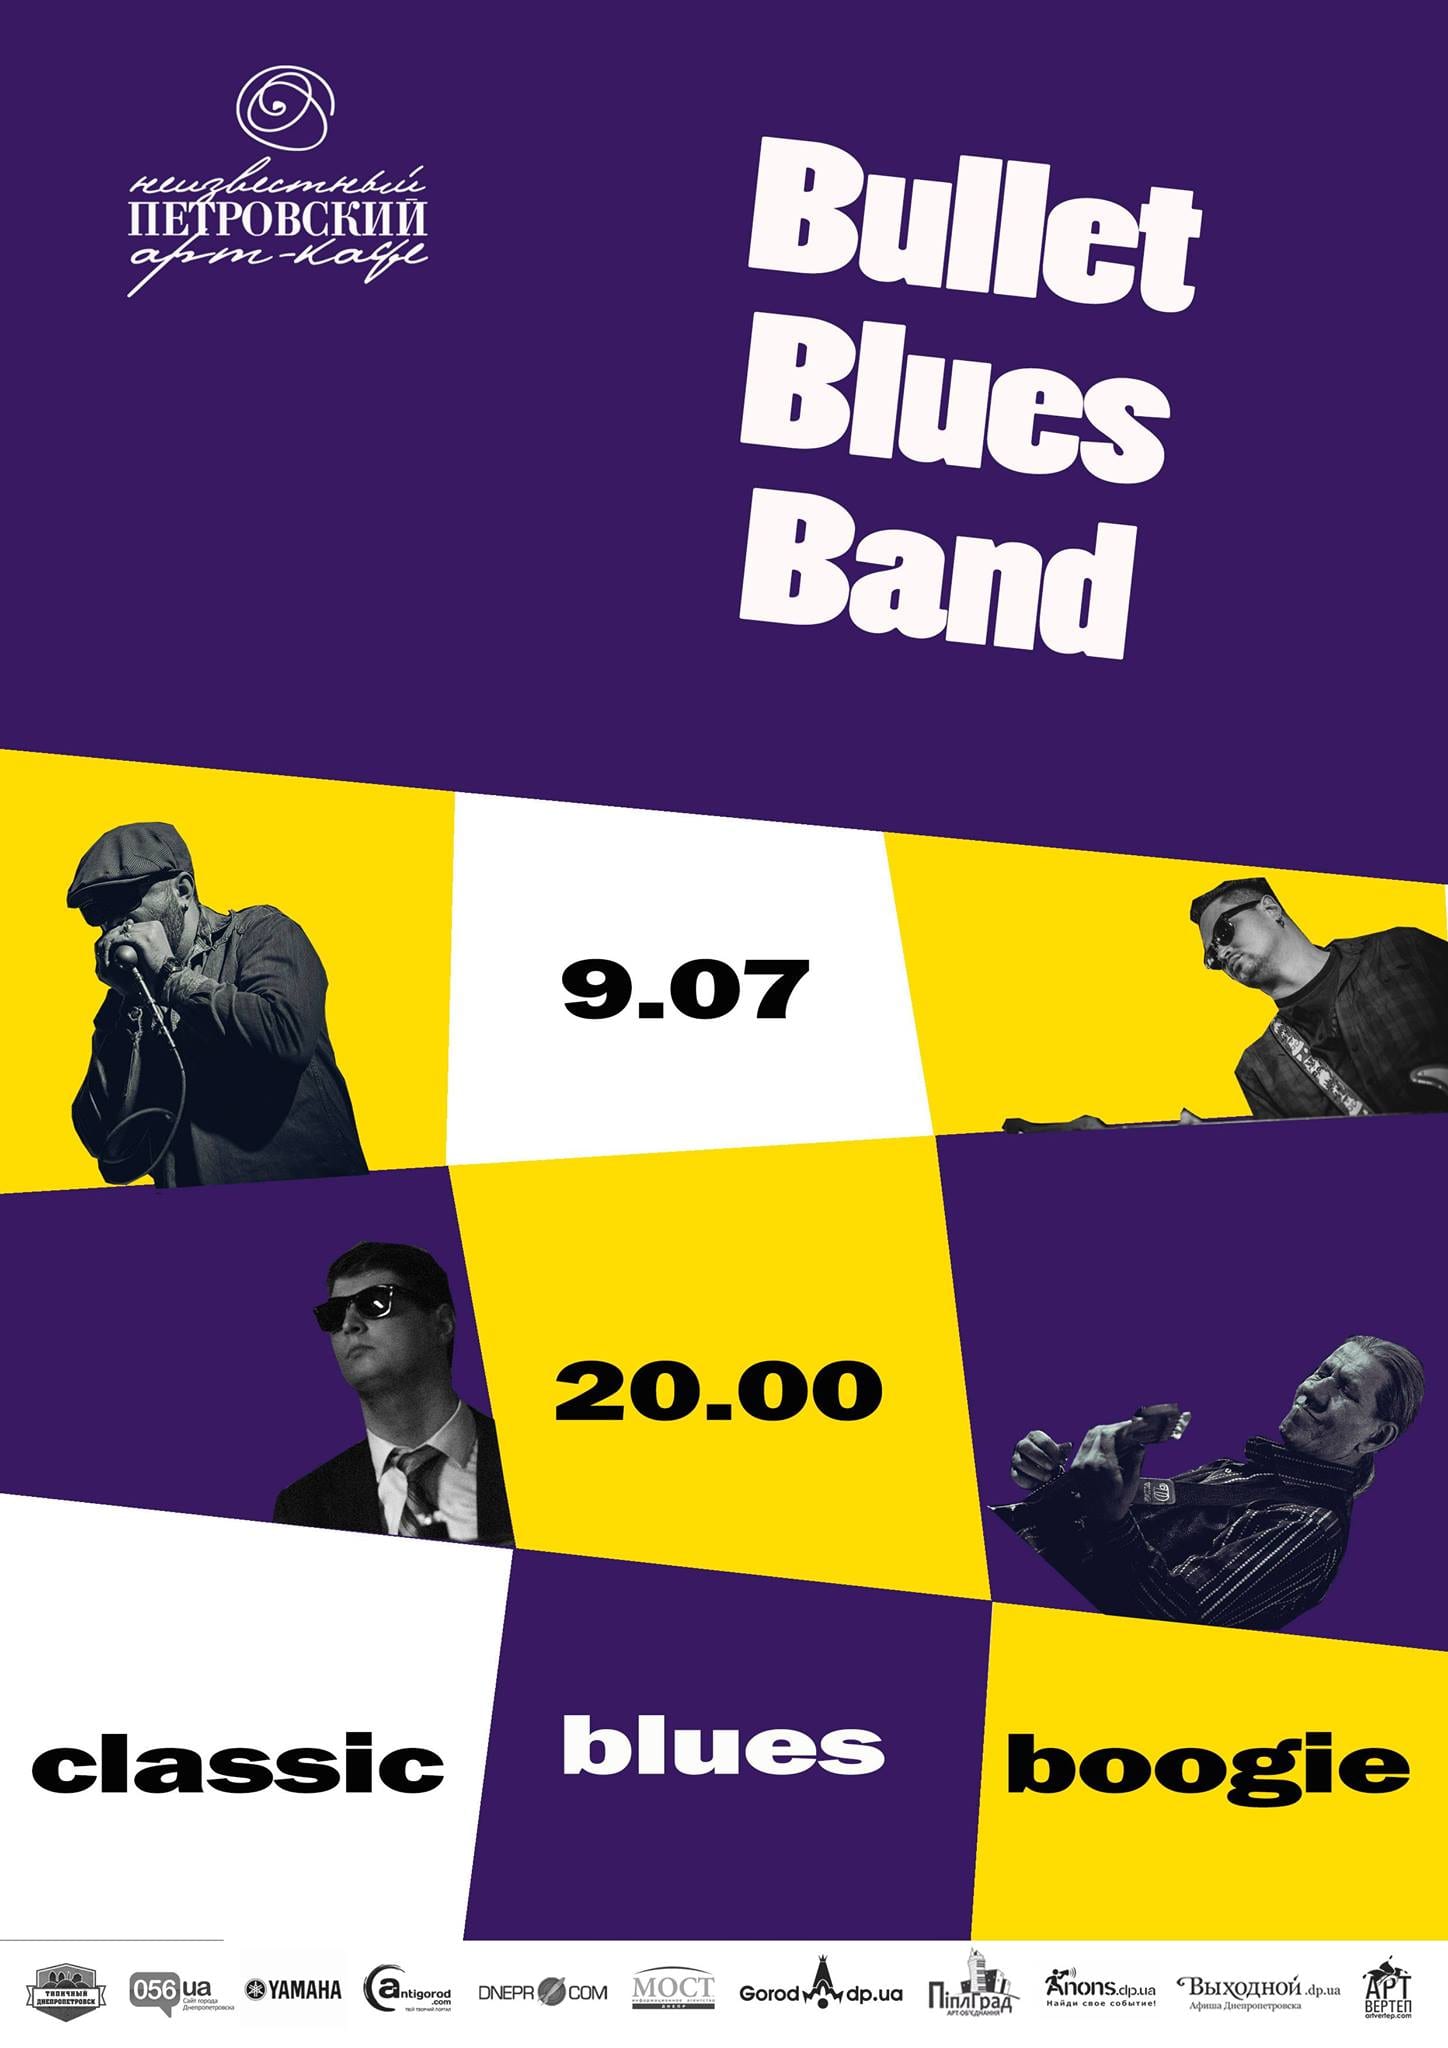 Bullet Blues Band Днепр, 09.07.2020, цена, фото, купить билеты. Афиша Днепра